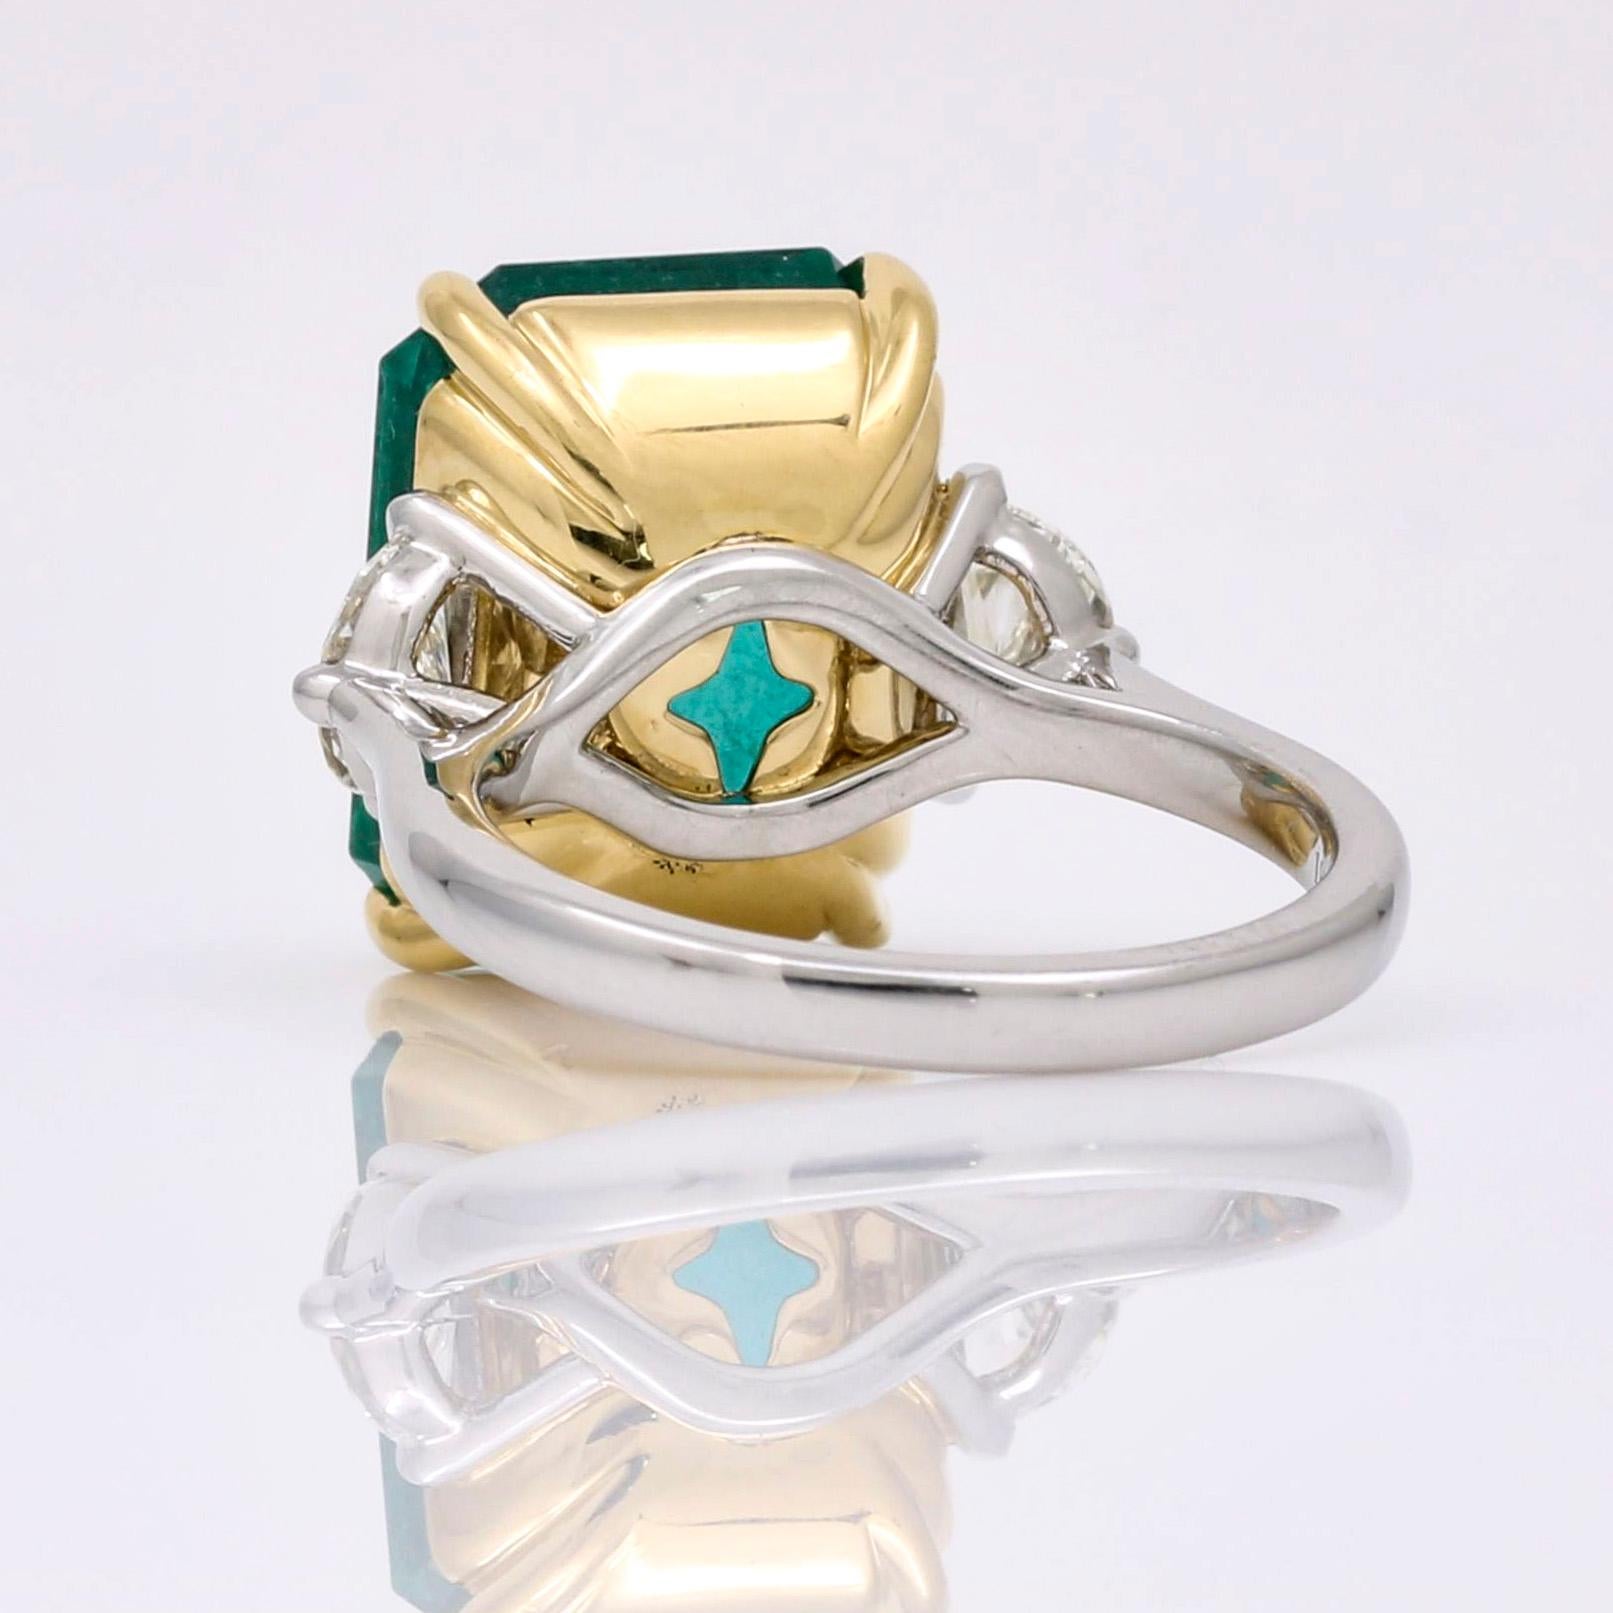 Emerald Cut 11.58 Carat Emerald Diamond Statement Ring in 18 Karat Yellow Gold and Platinum 